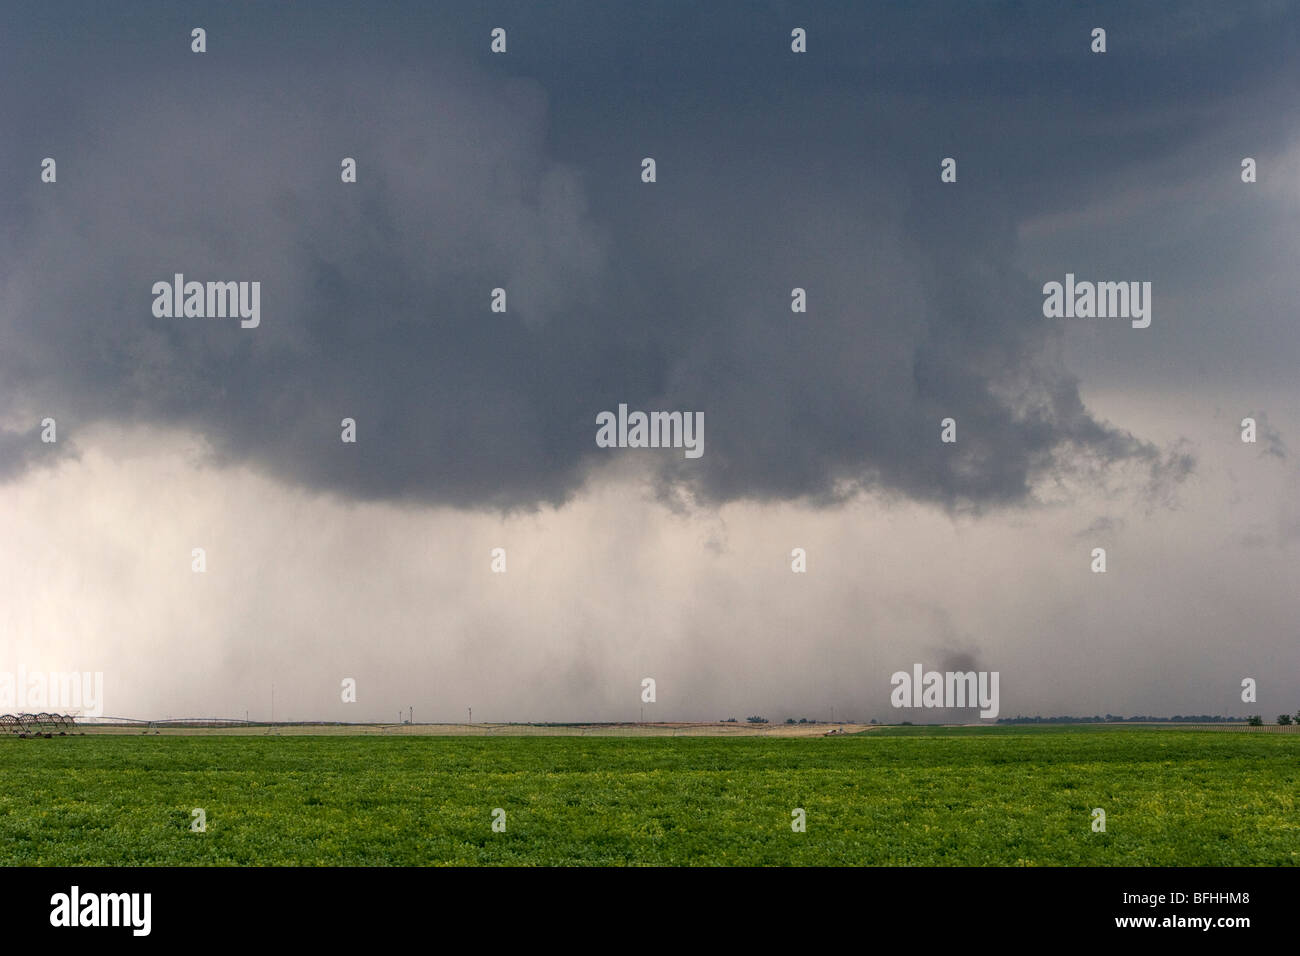 A storm cloud above a green field. June 9, 2009. Stock Photo